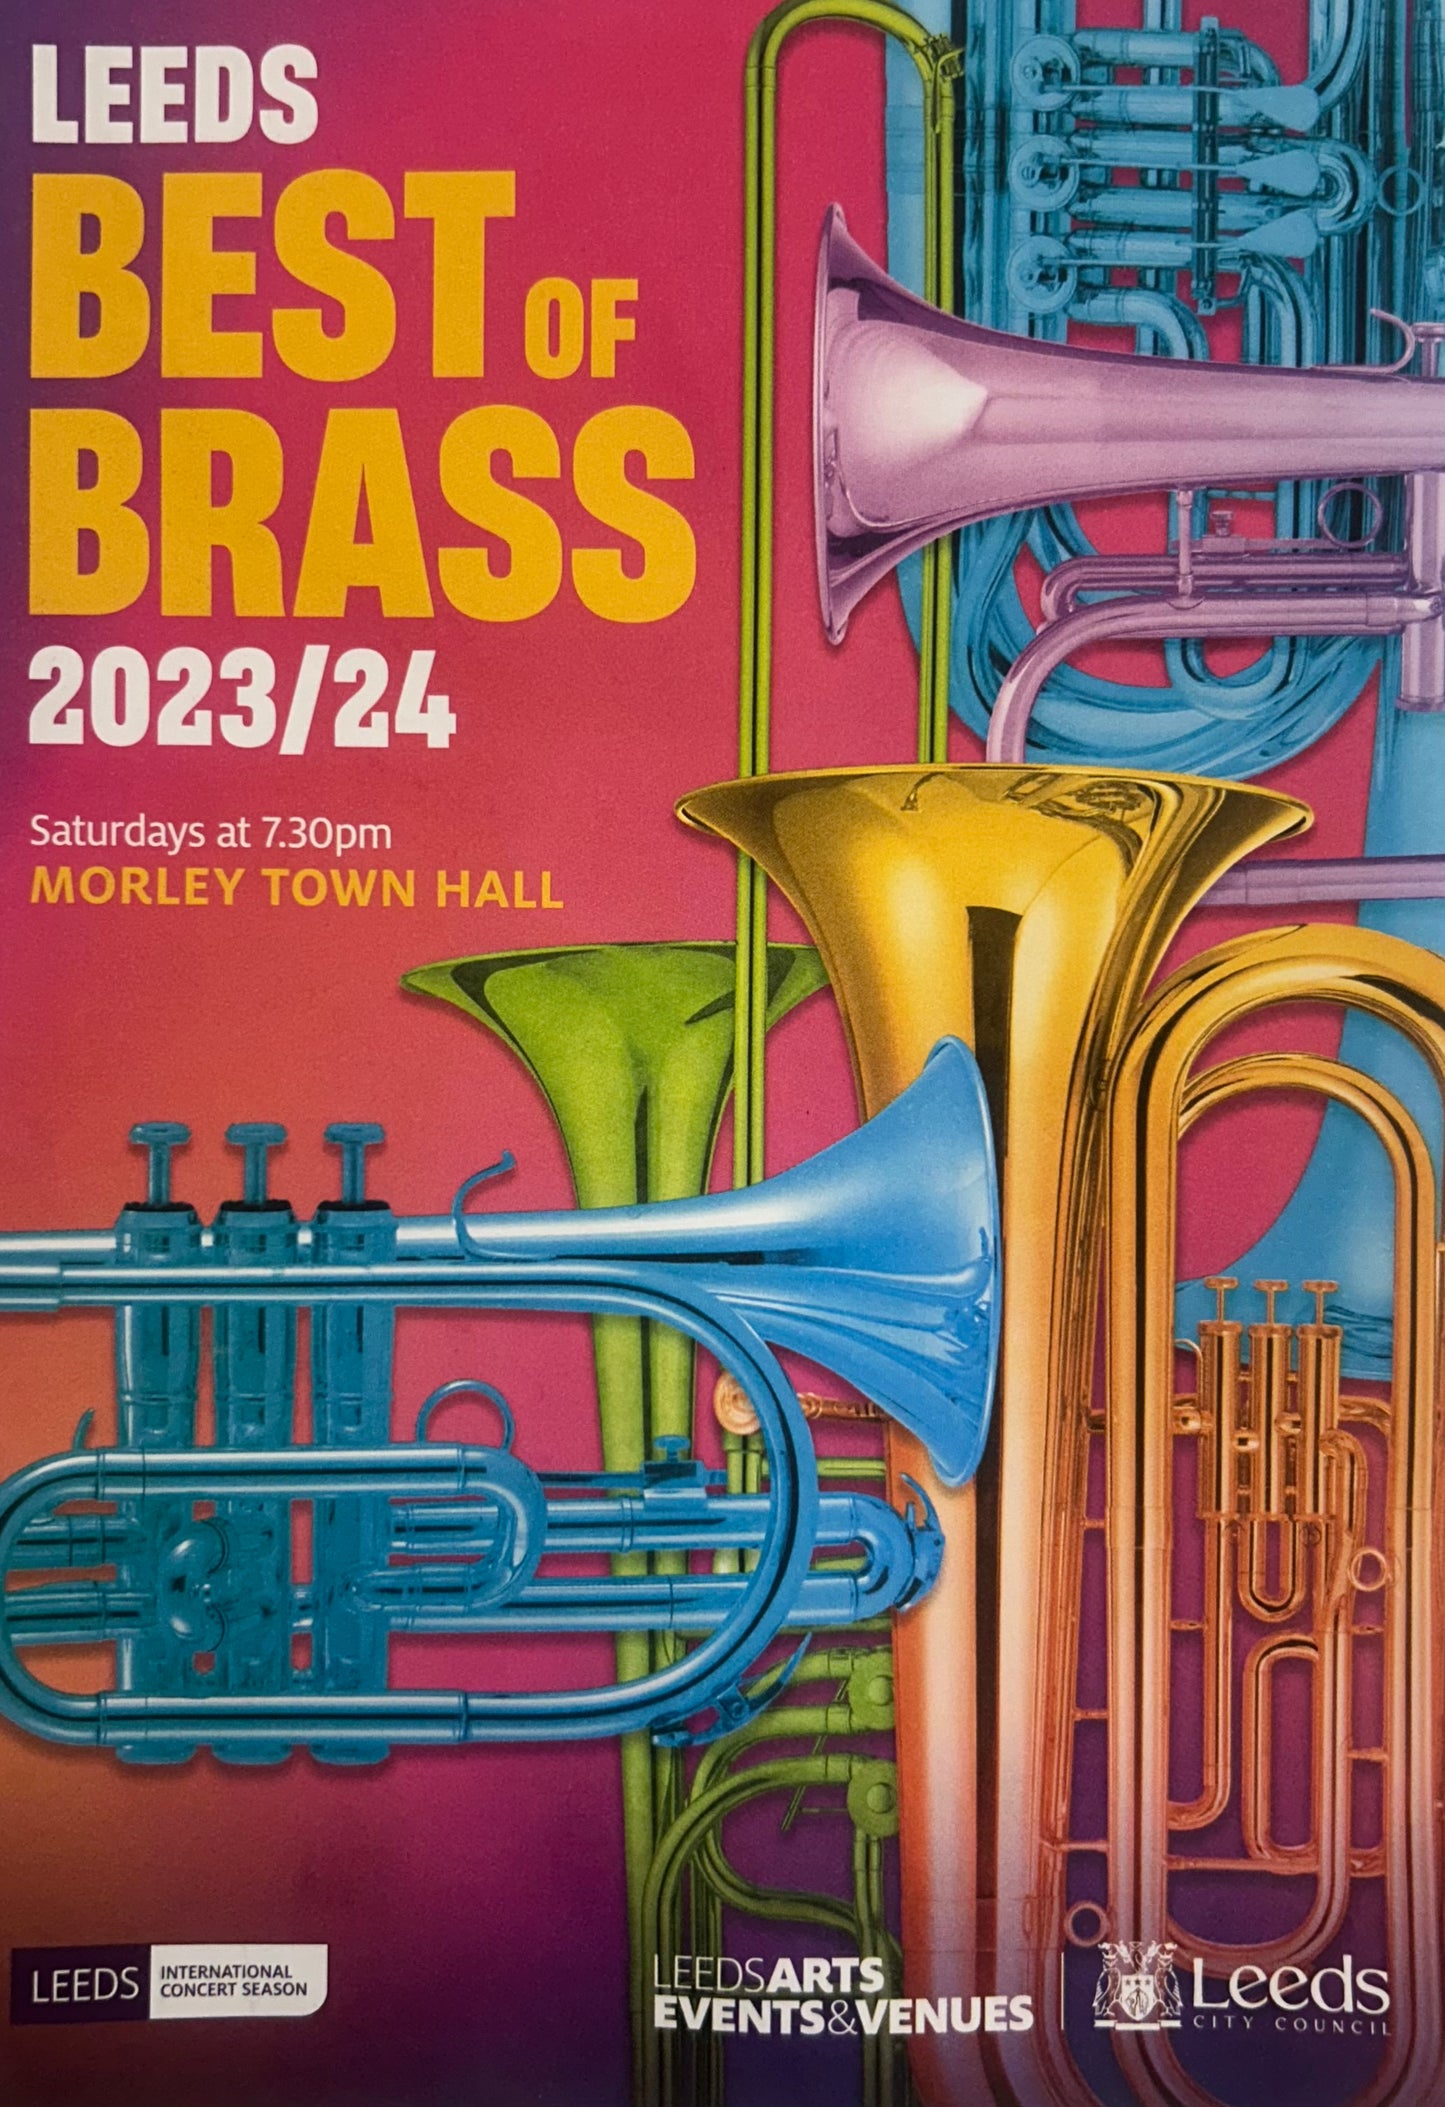 Leeds Best of Brass 2023/24